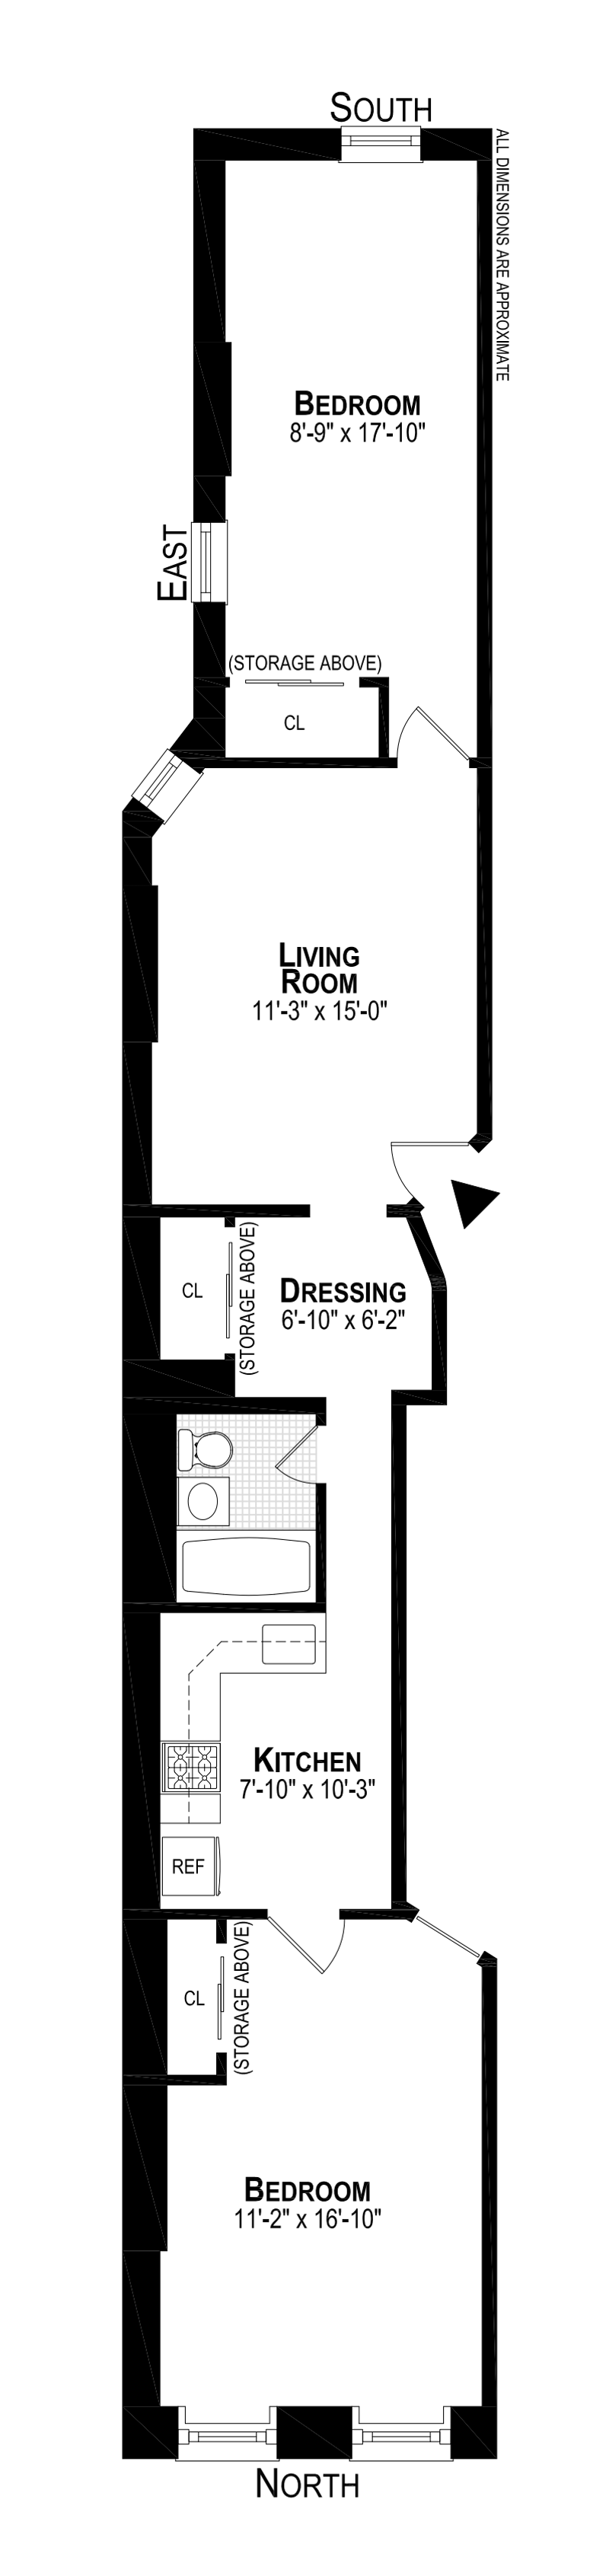 Floorplan for 108 West 17th Street, 10